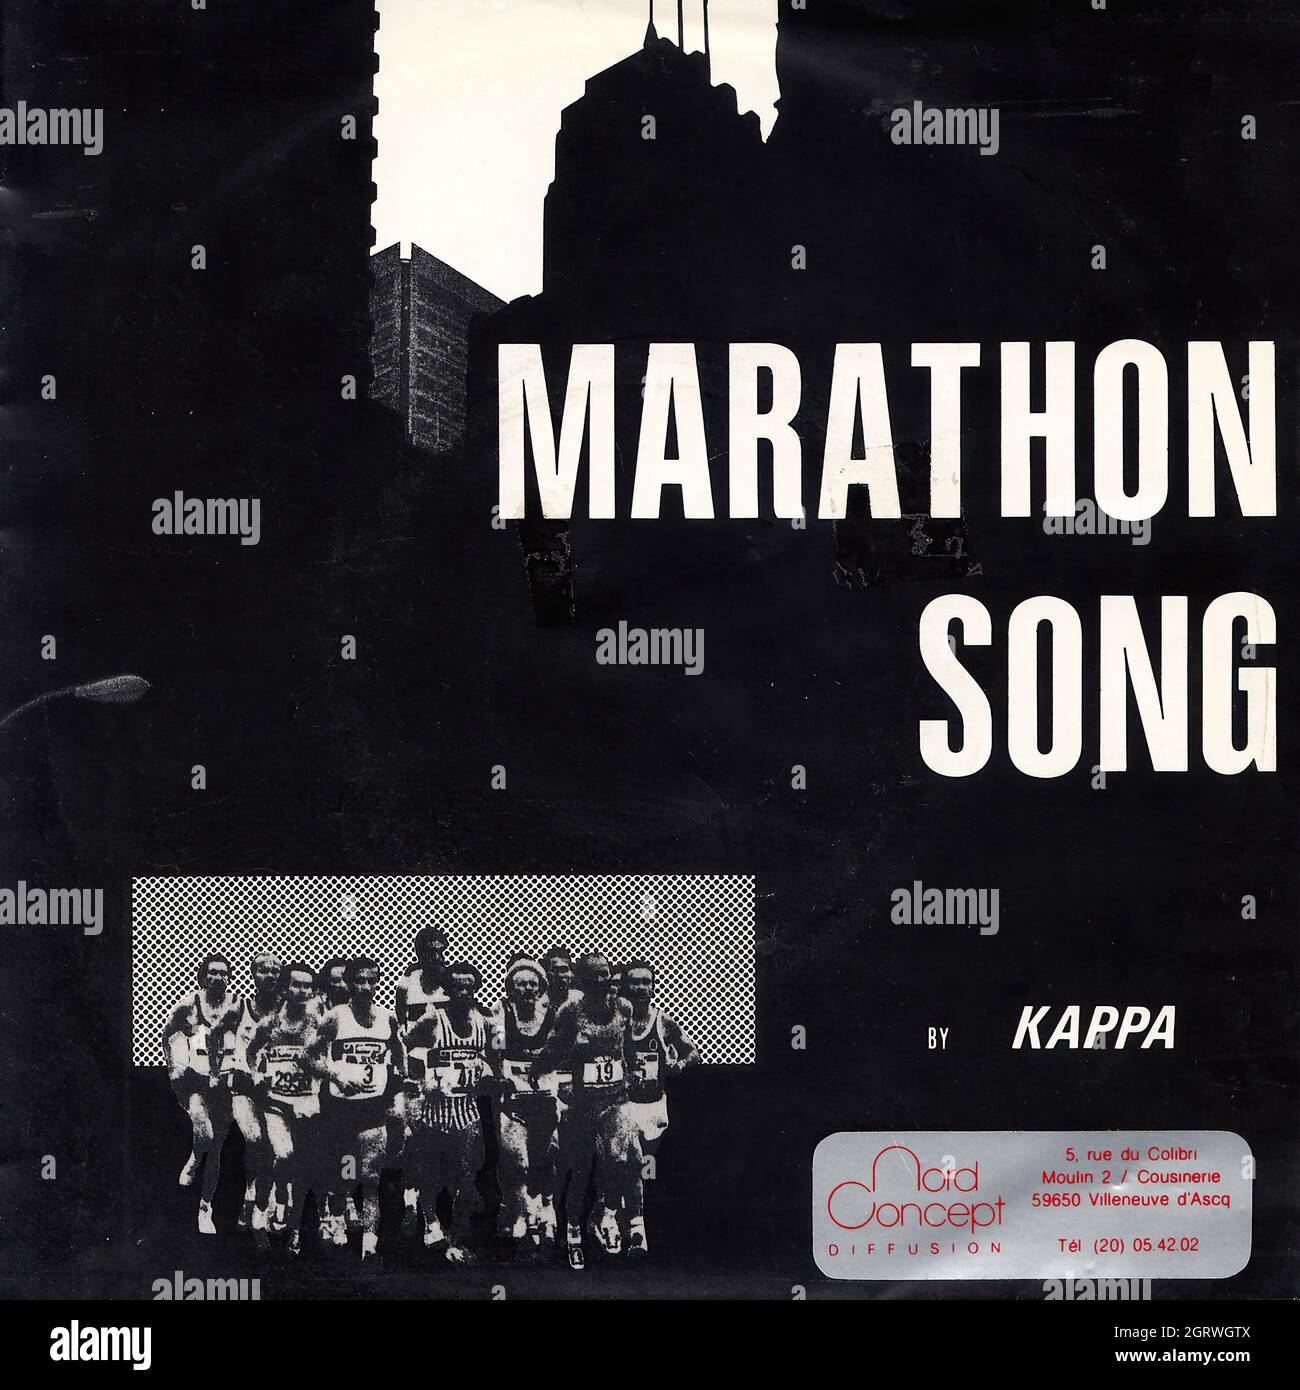 Revisor ristet brød niece Kappa - Marathon song - Kappa's theme 45rpm - Vintage Vinyl Record Cover  Stock Photo - Alamy